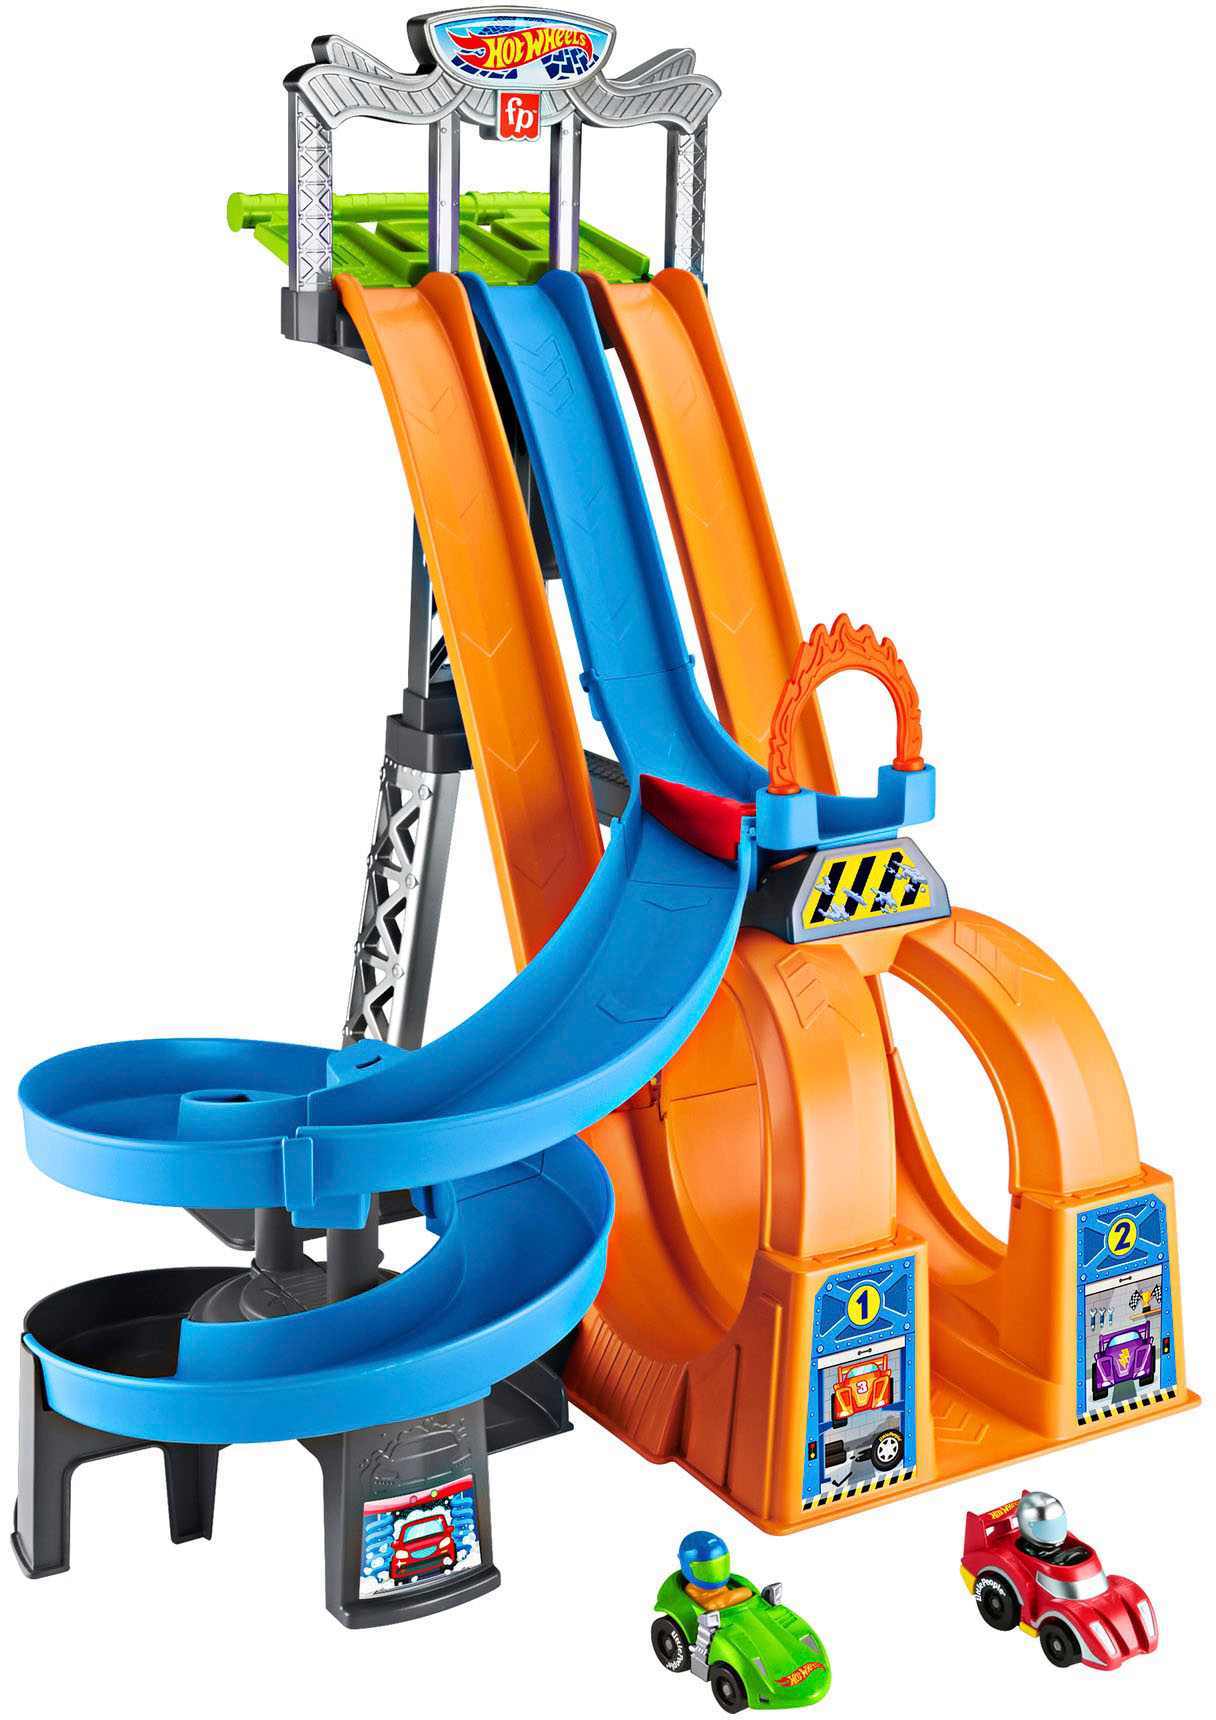 Left View: Hot Wheels - Racing Loops Tower by Little People - Blue/Orange